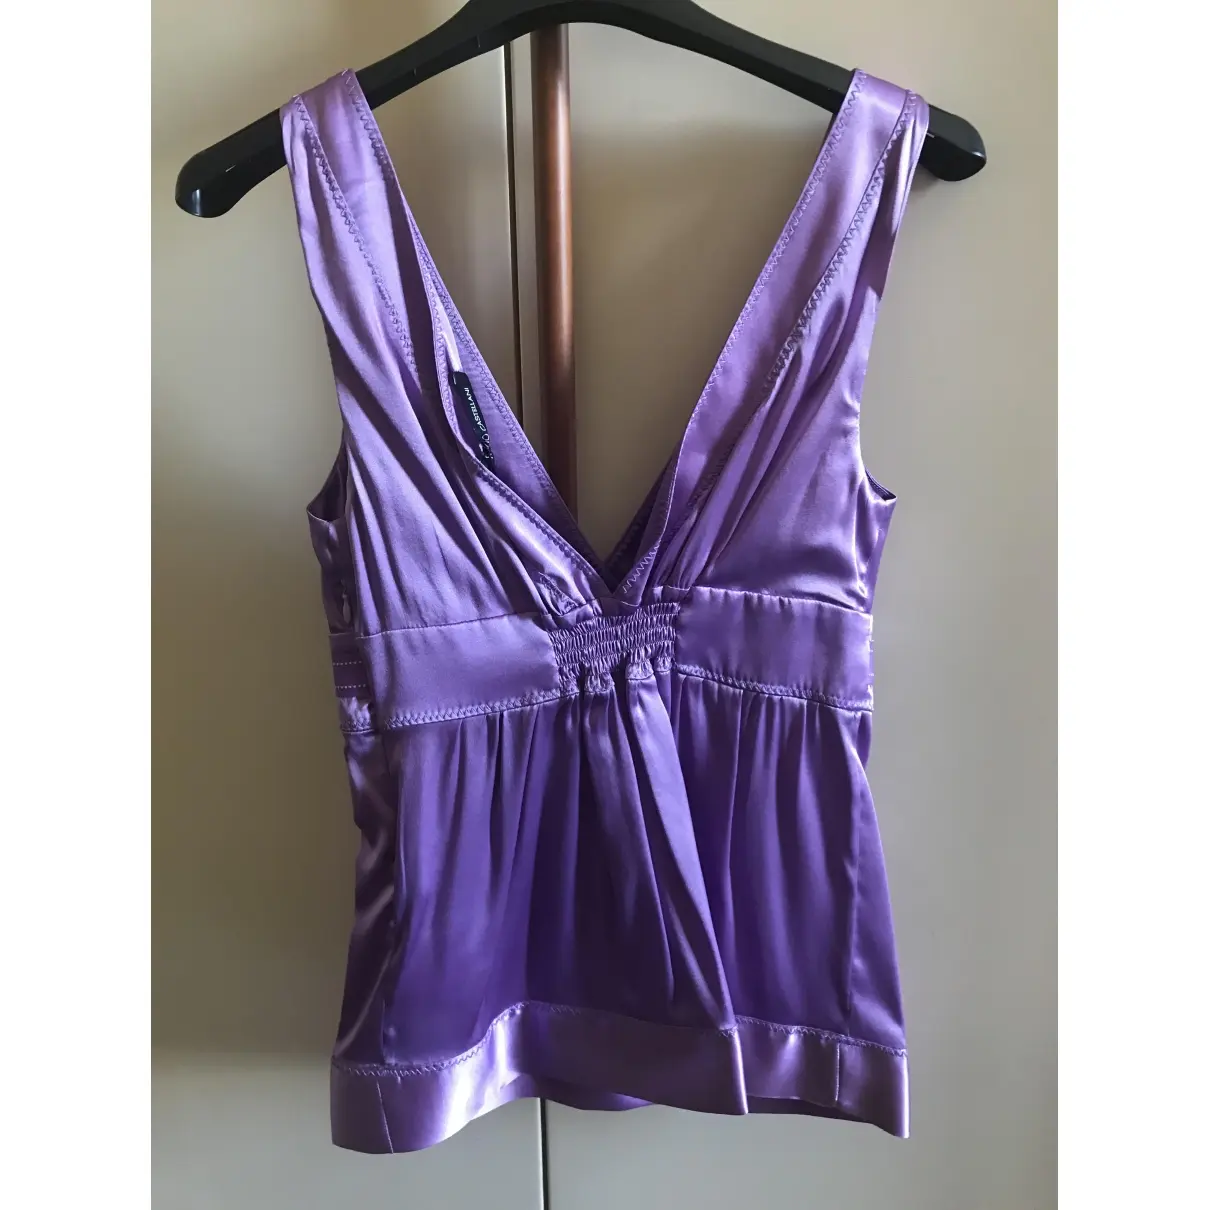 Buy Flavio Castellani Silk camisole online